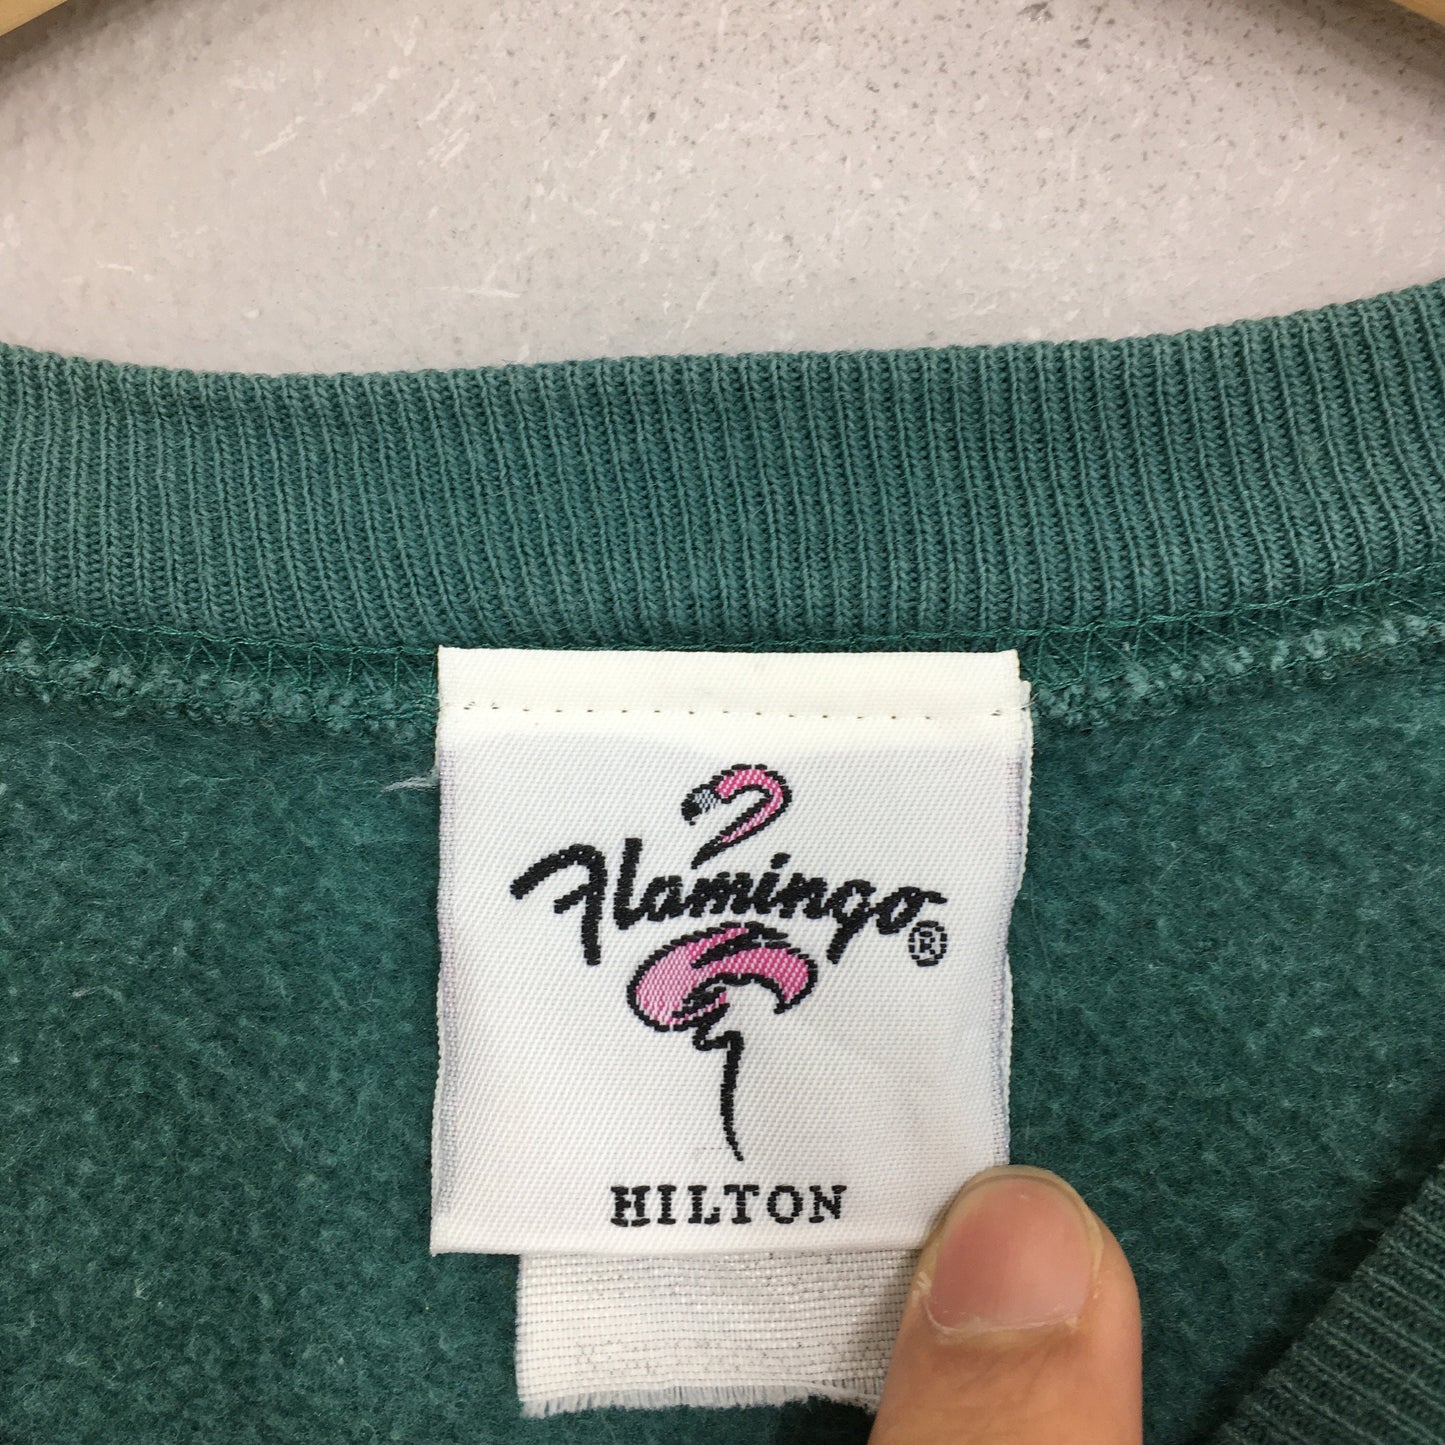 Flamingo Hilton Las Vegas Green Sweatshirt Medium